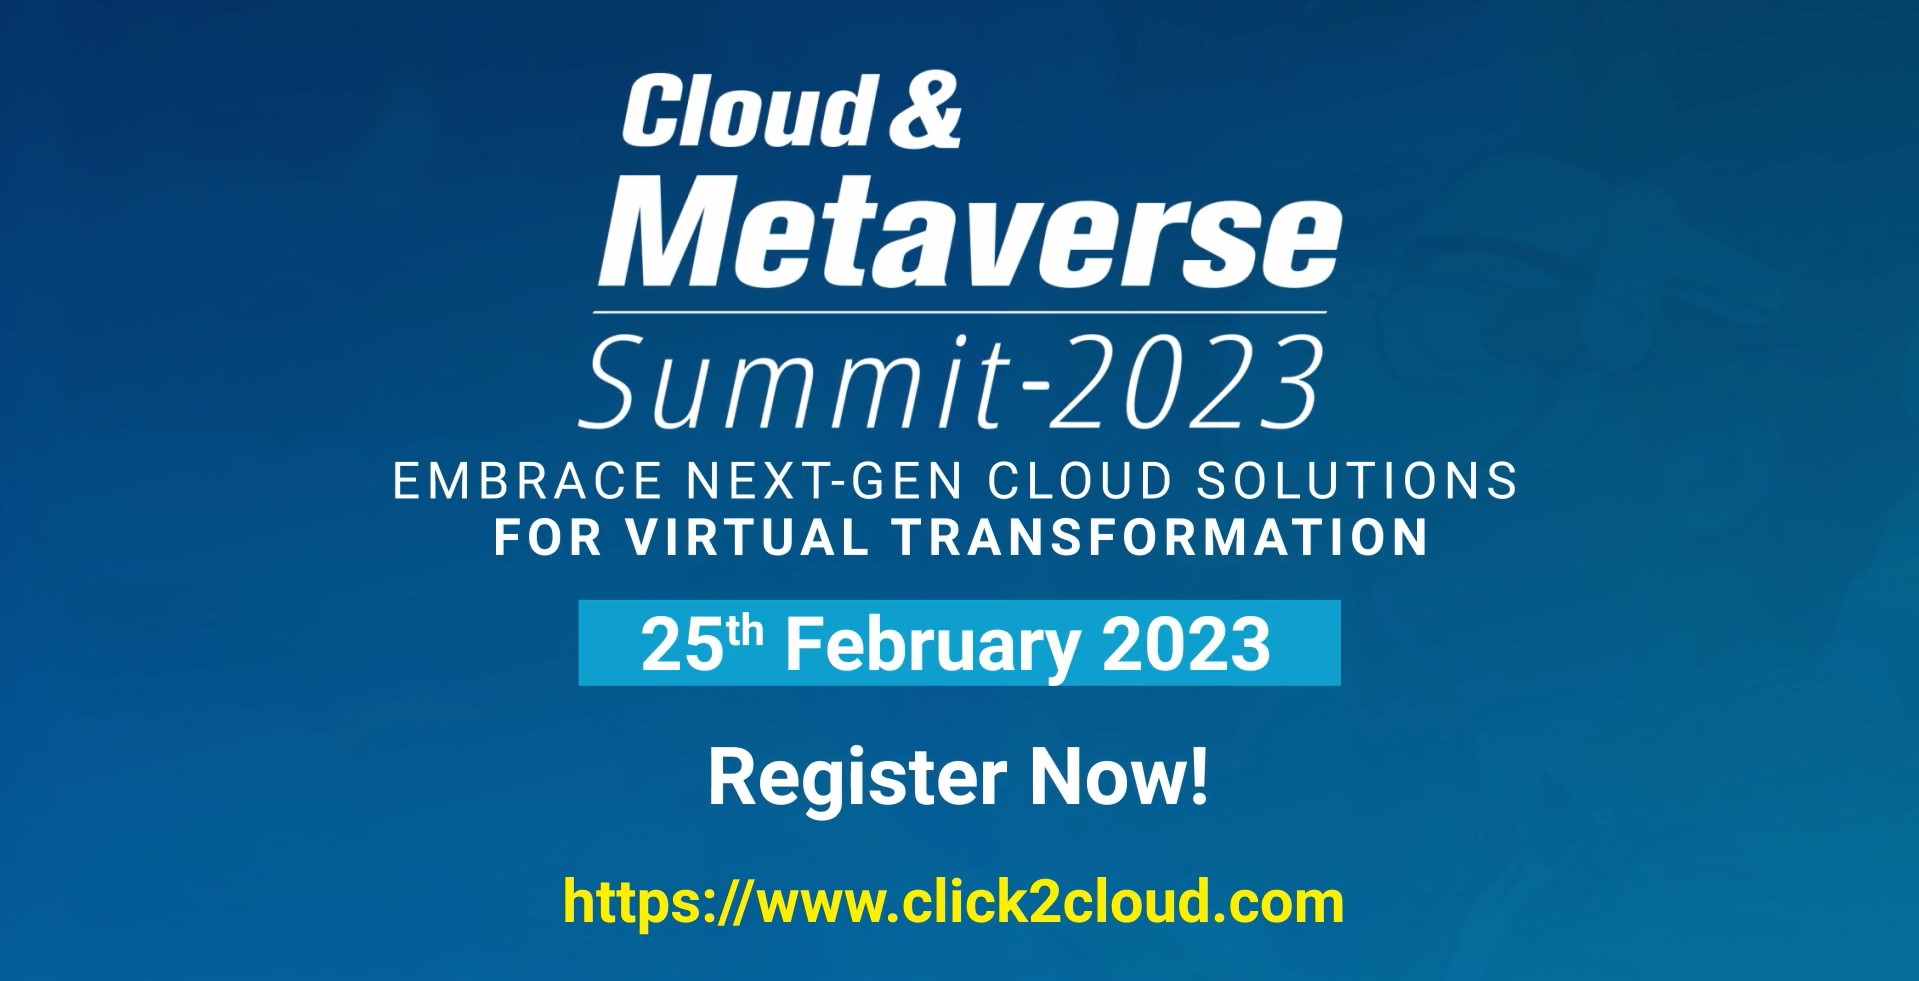 Click2cloud-Cloud & Metaverse Summit 2023 - Largest Global Cloud Summit - February 25, 2023_Video